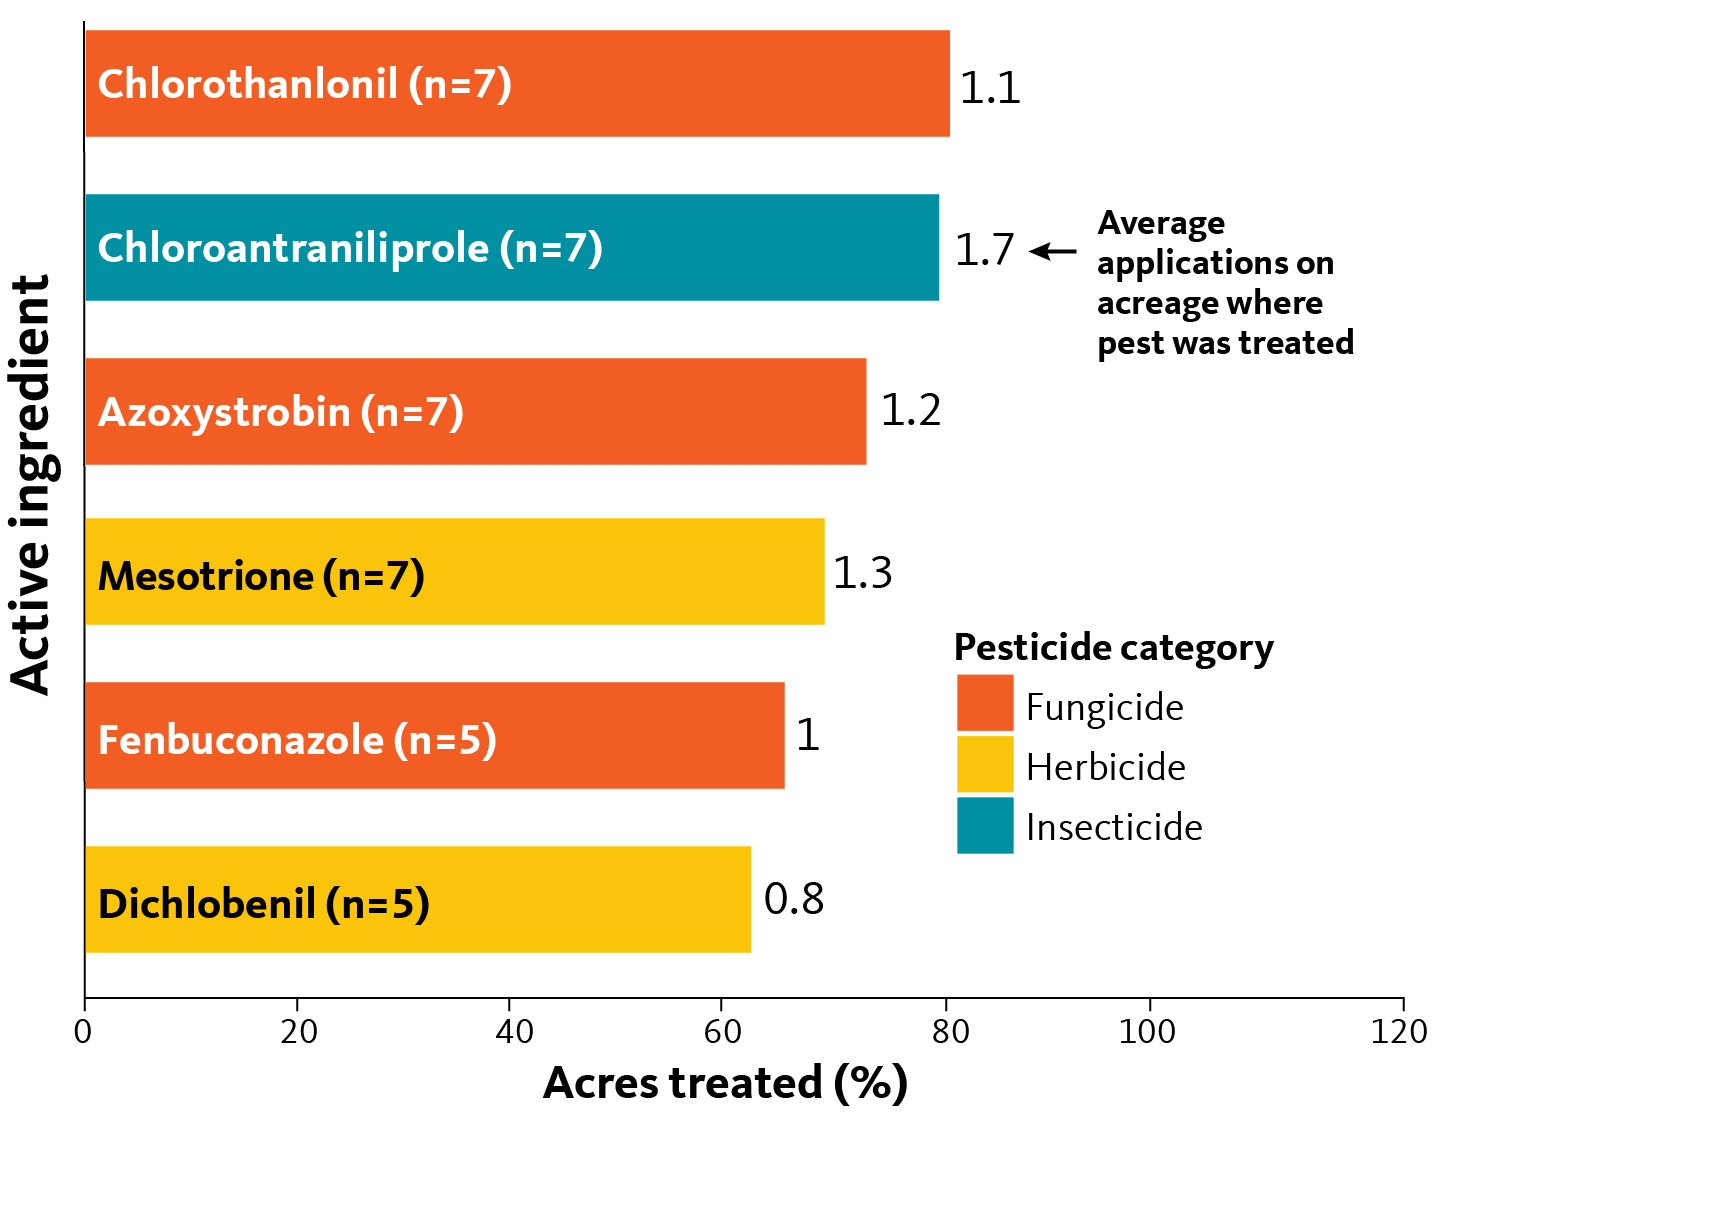 Bar chart showing top pesticides